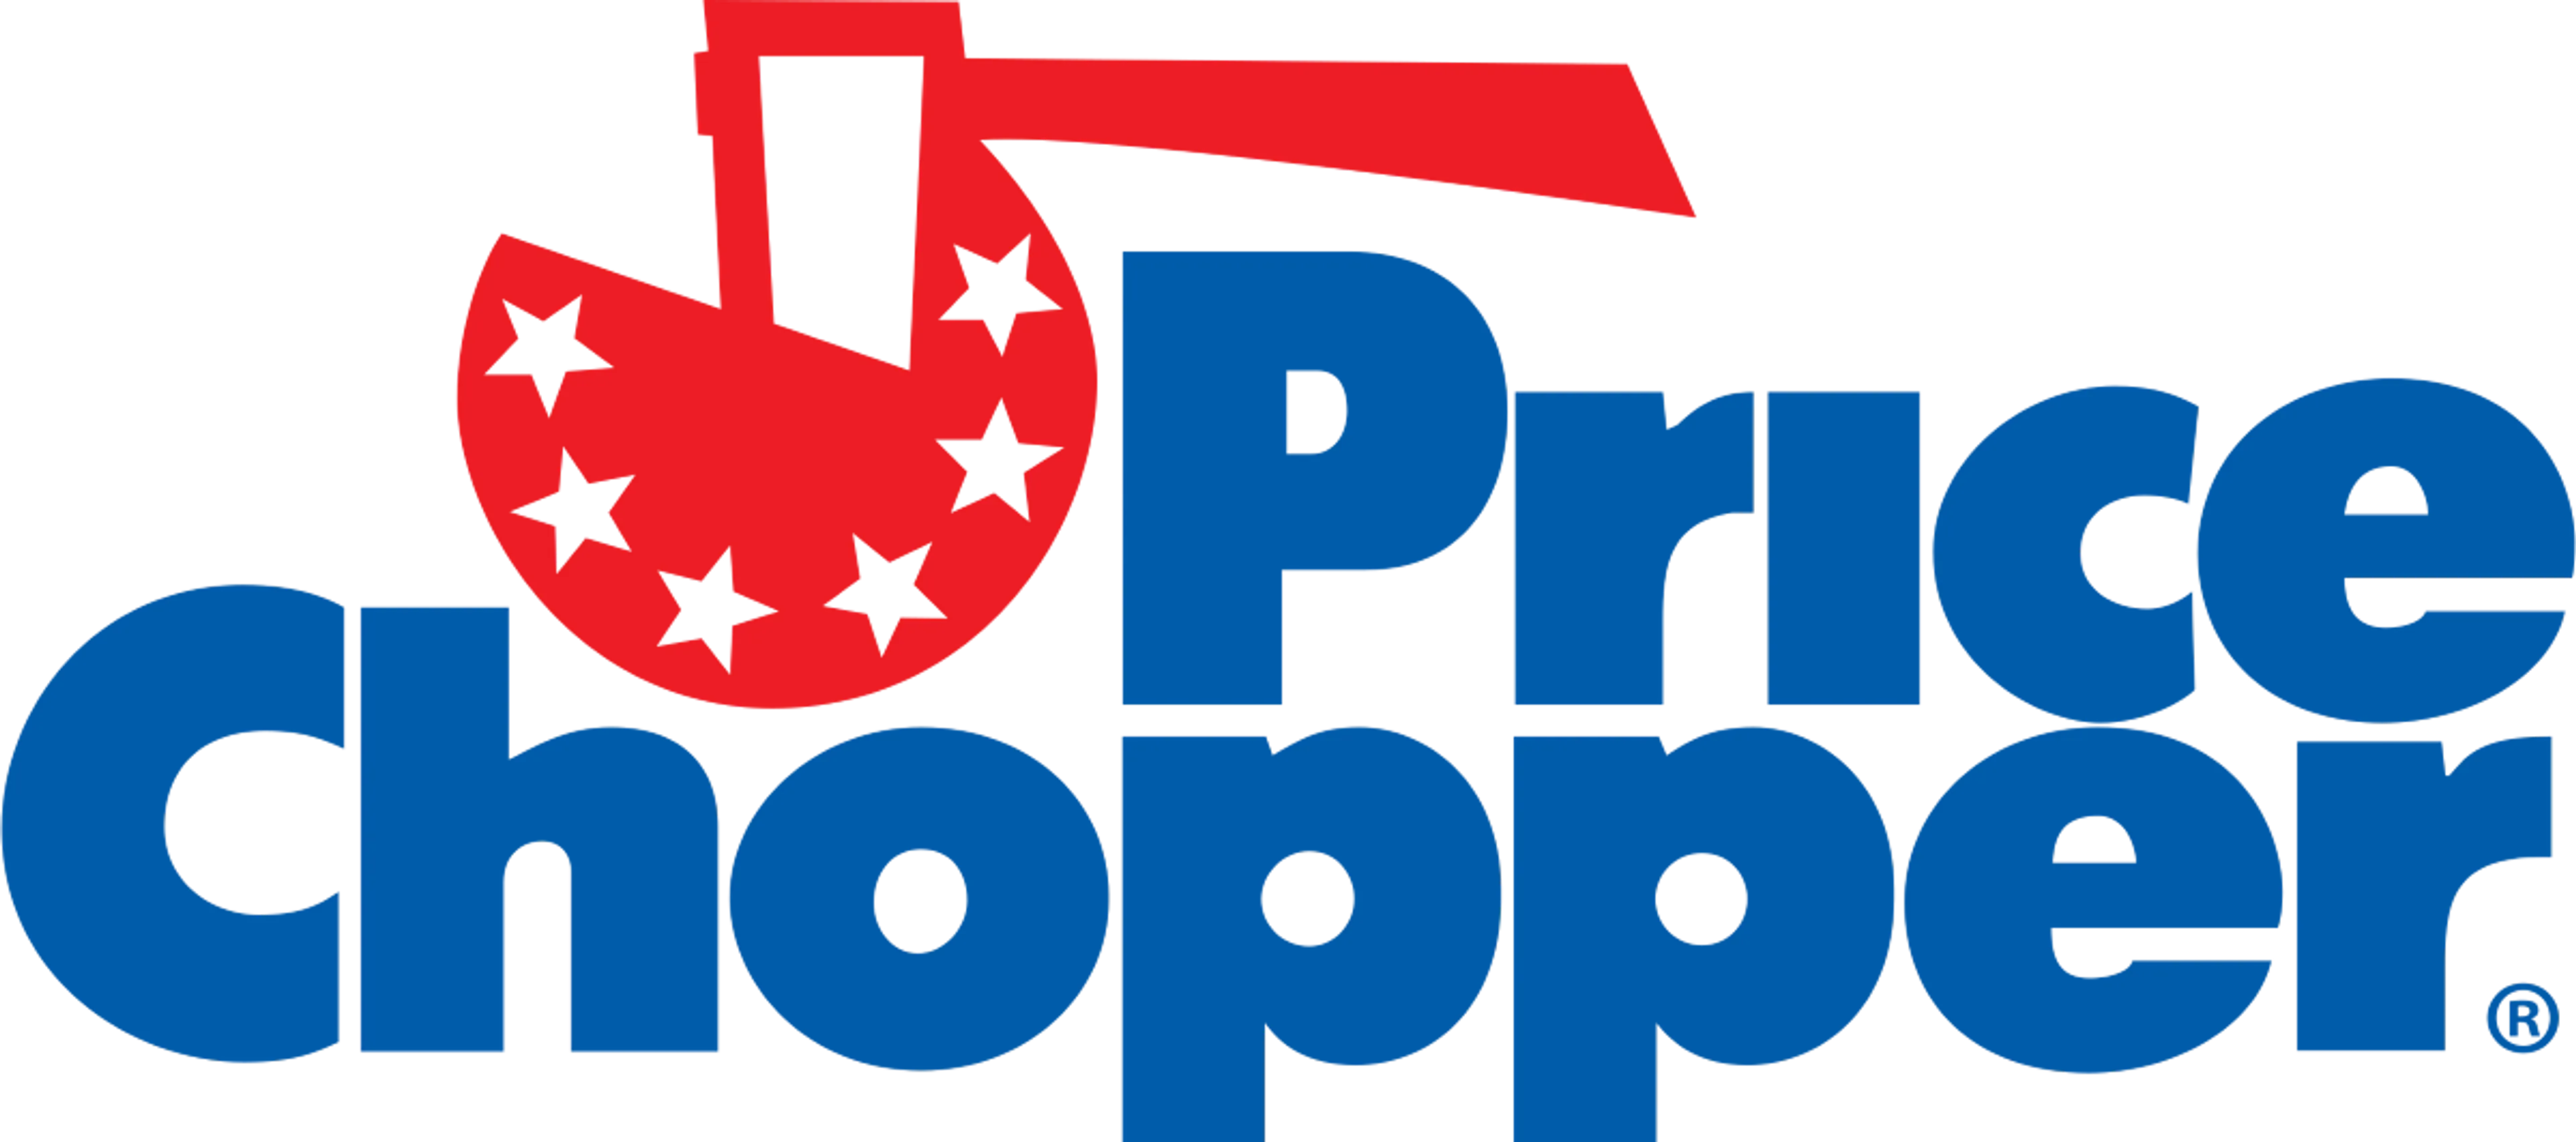 PRICE CHOPPER logo